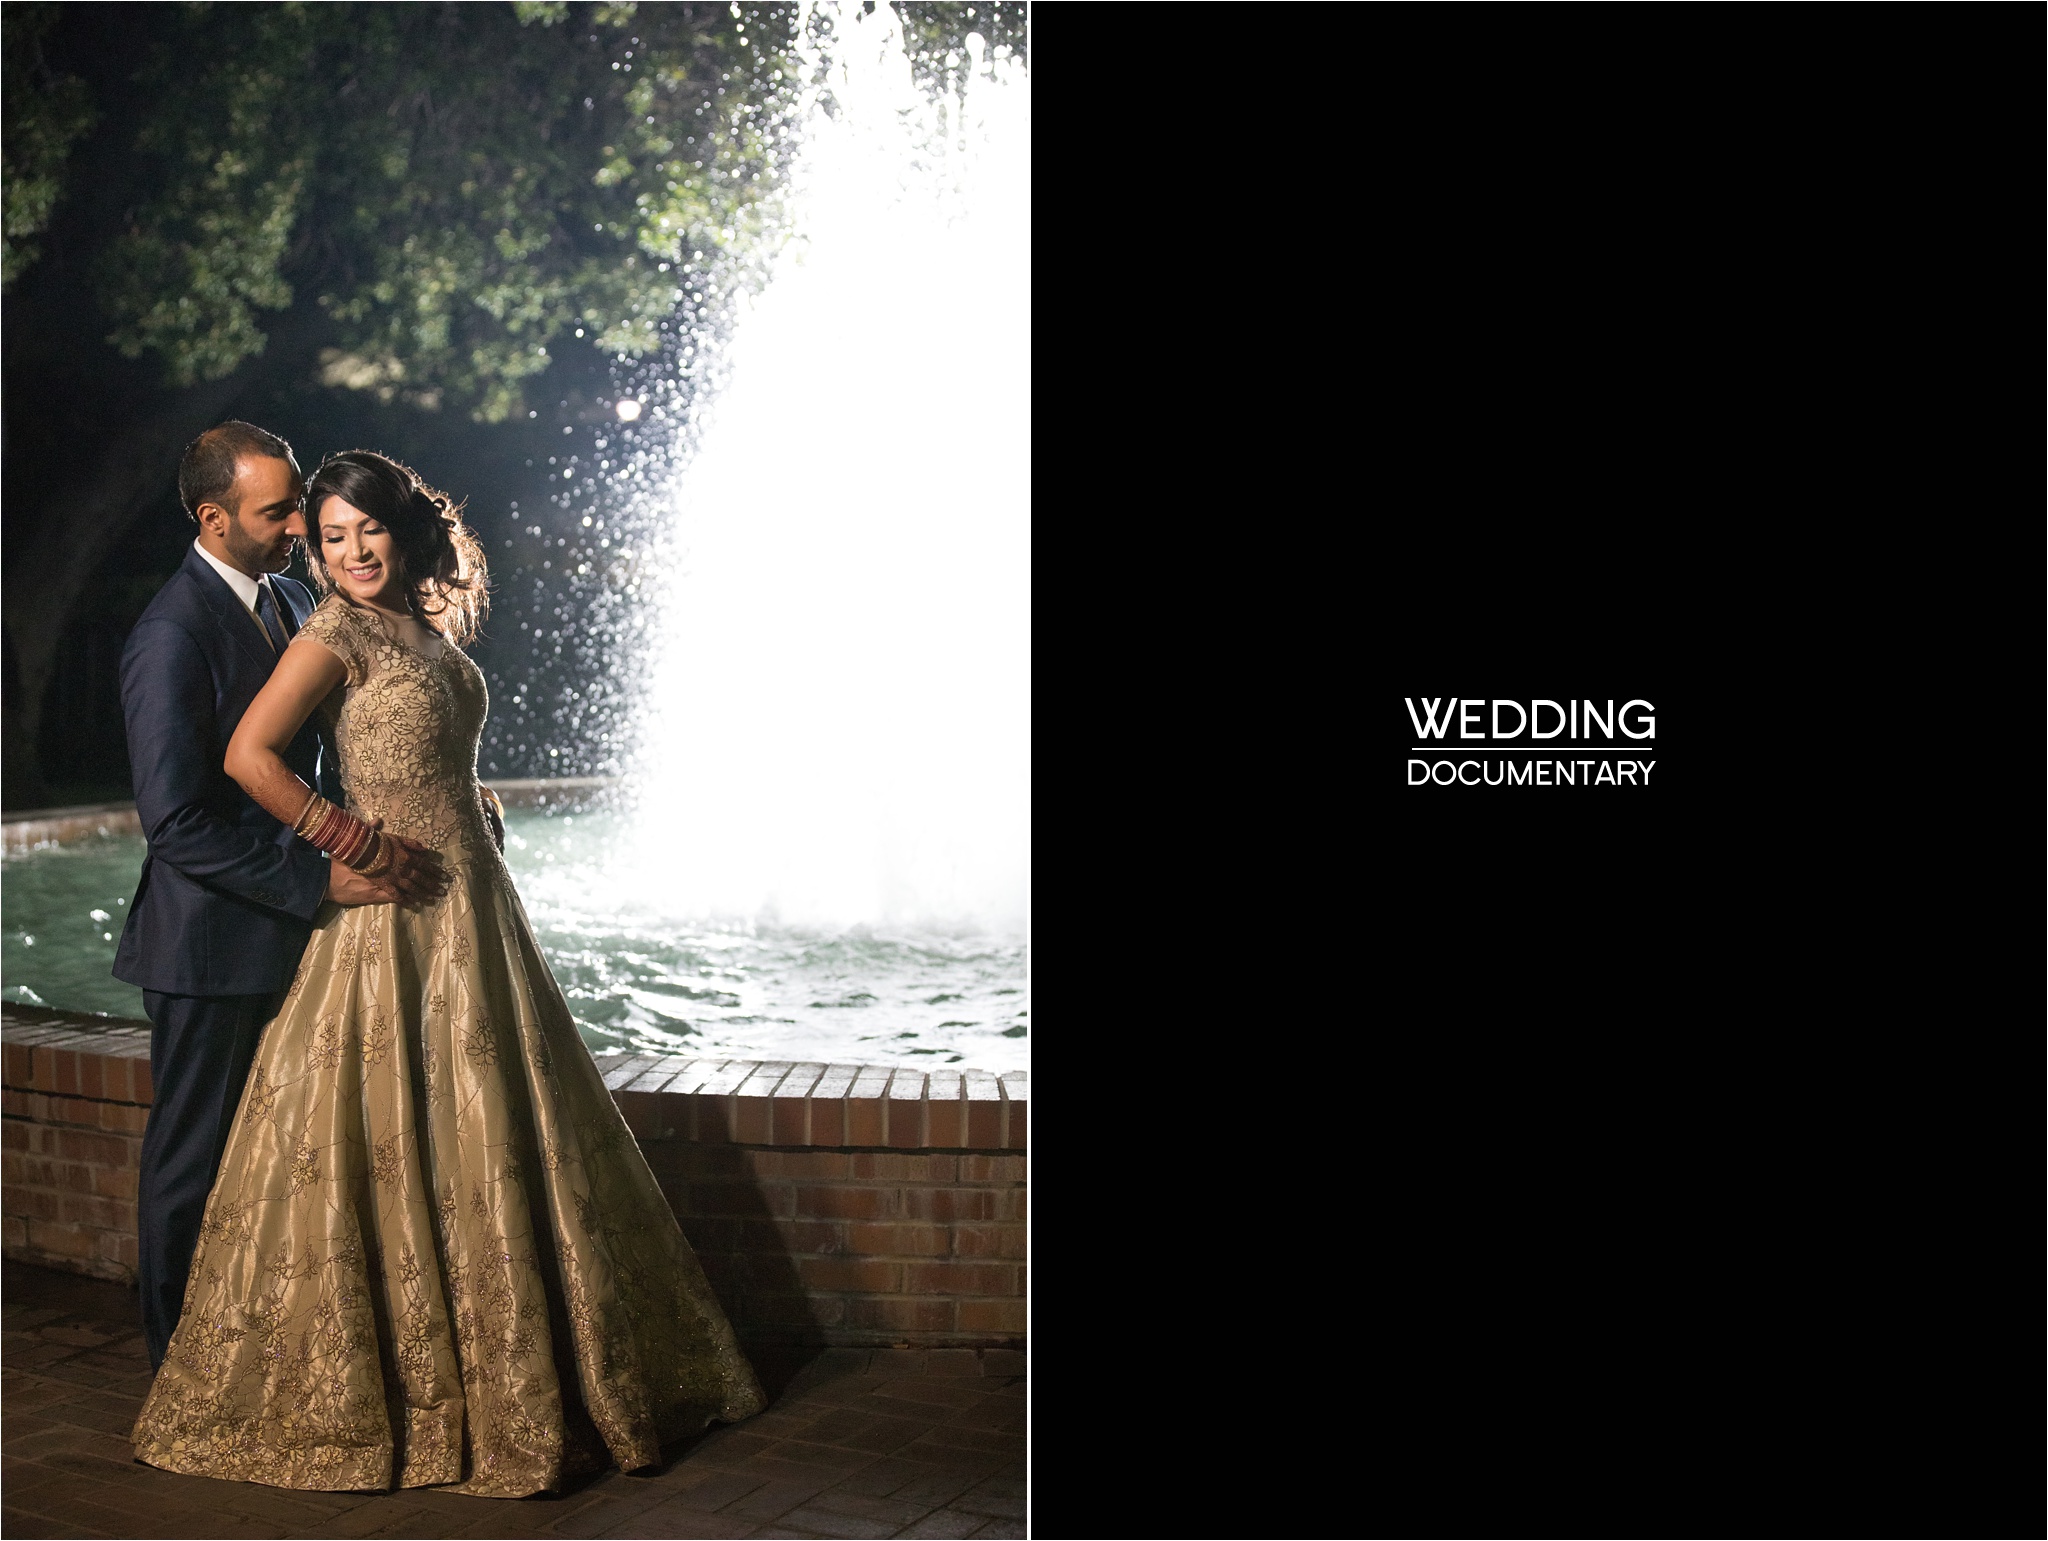 Modesto_Center_Plaza_Indian_Wedding_Reception_0029.jpg